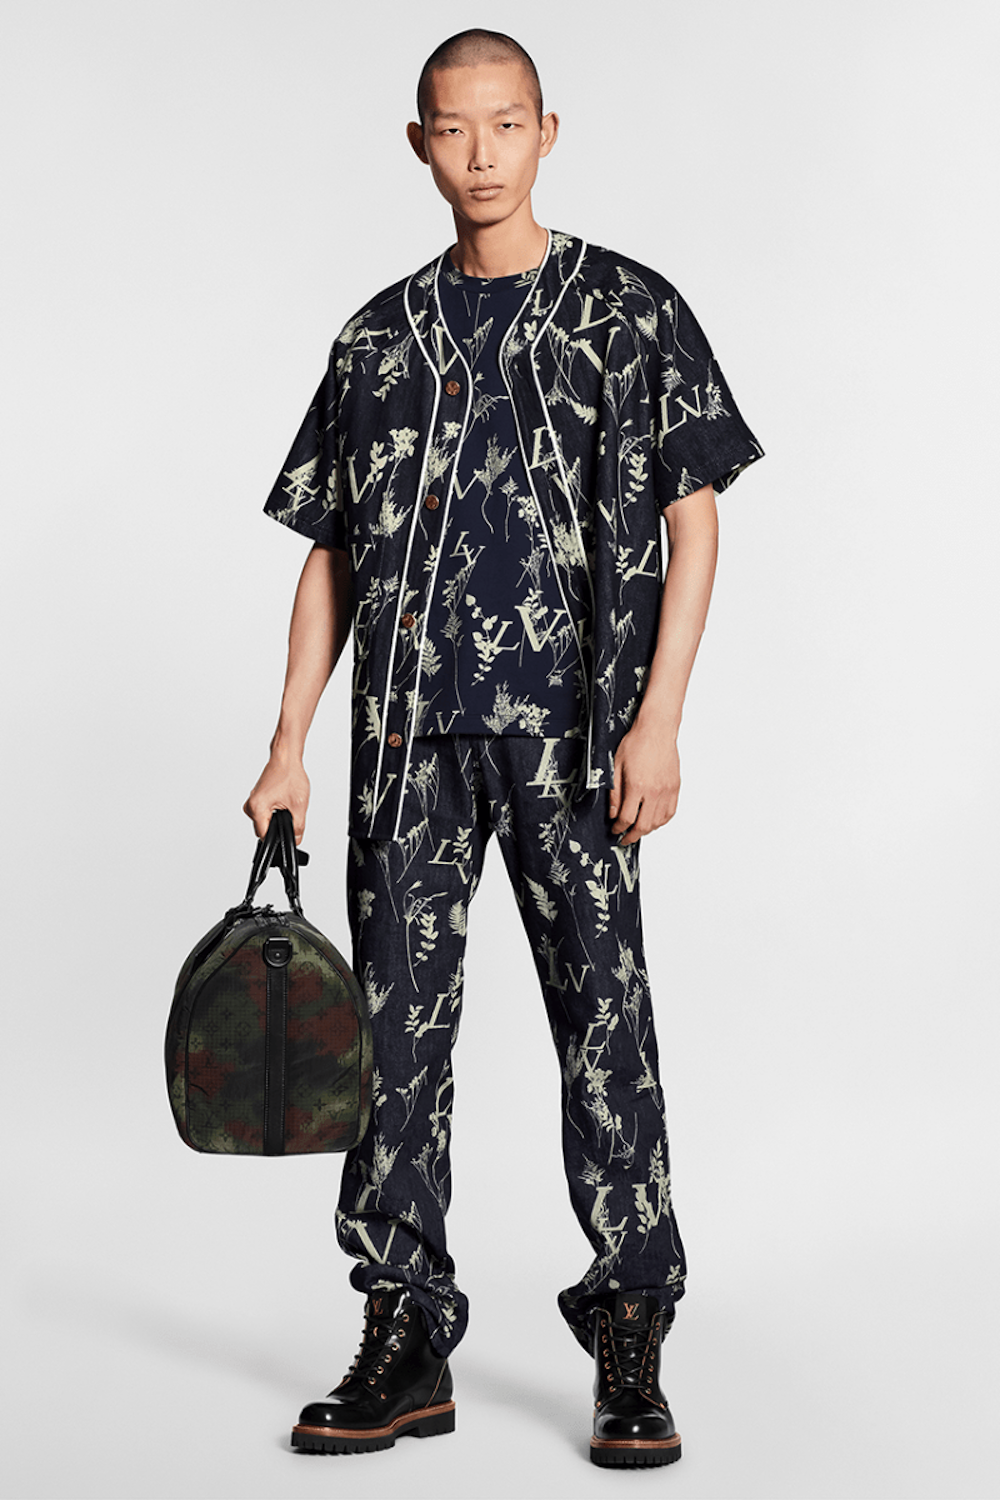 Louis Vuitton Menswear Introduce “Camo Monogram” and “Leaf” Ranges